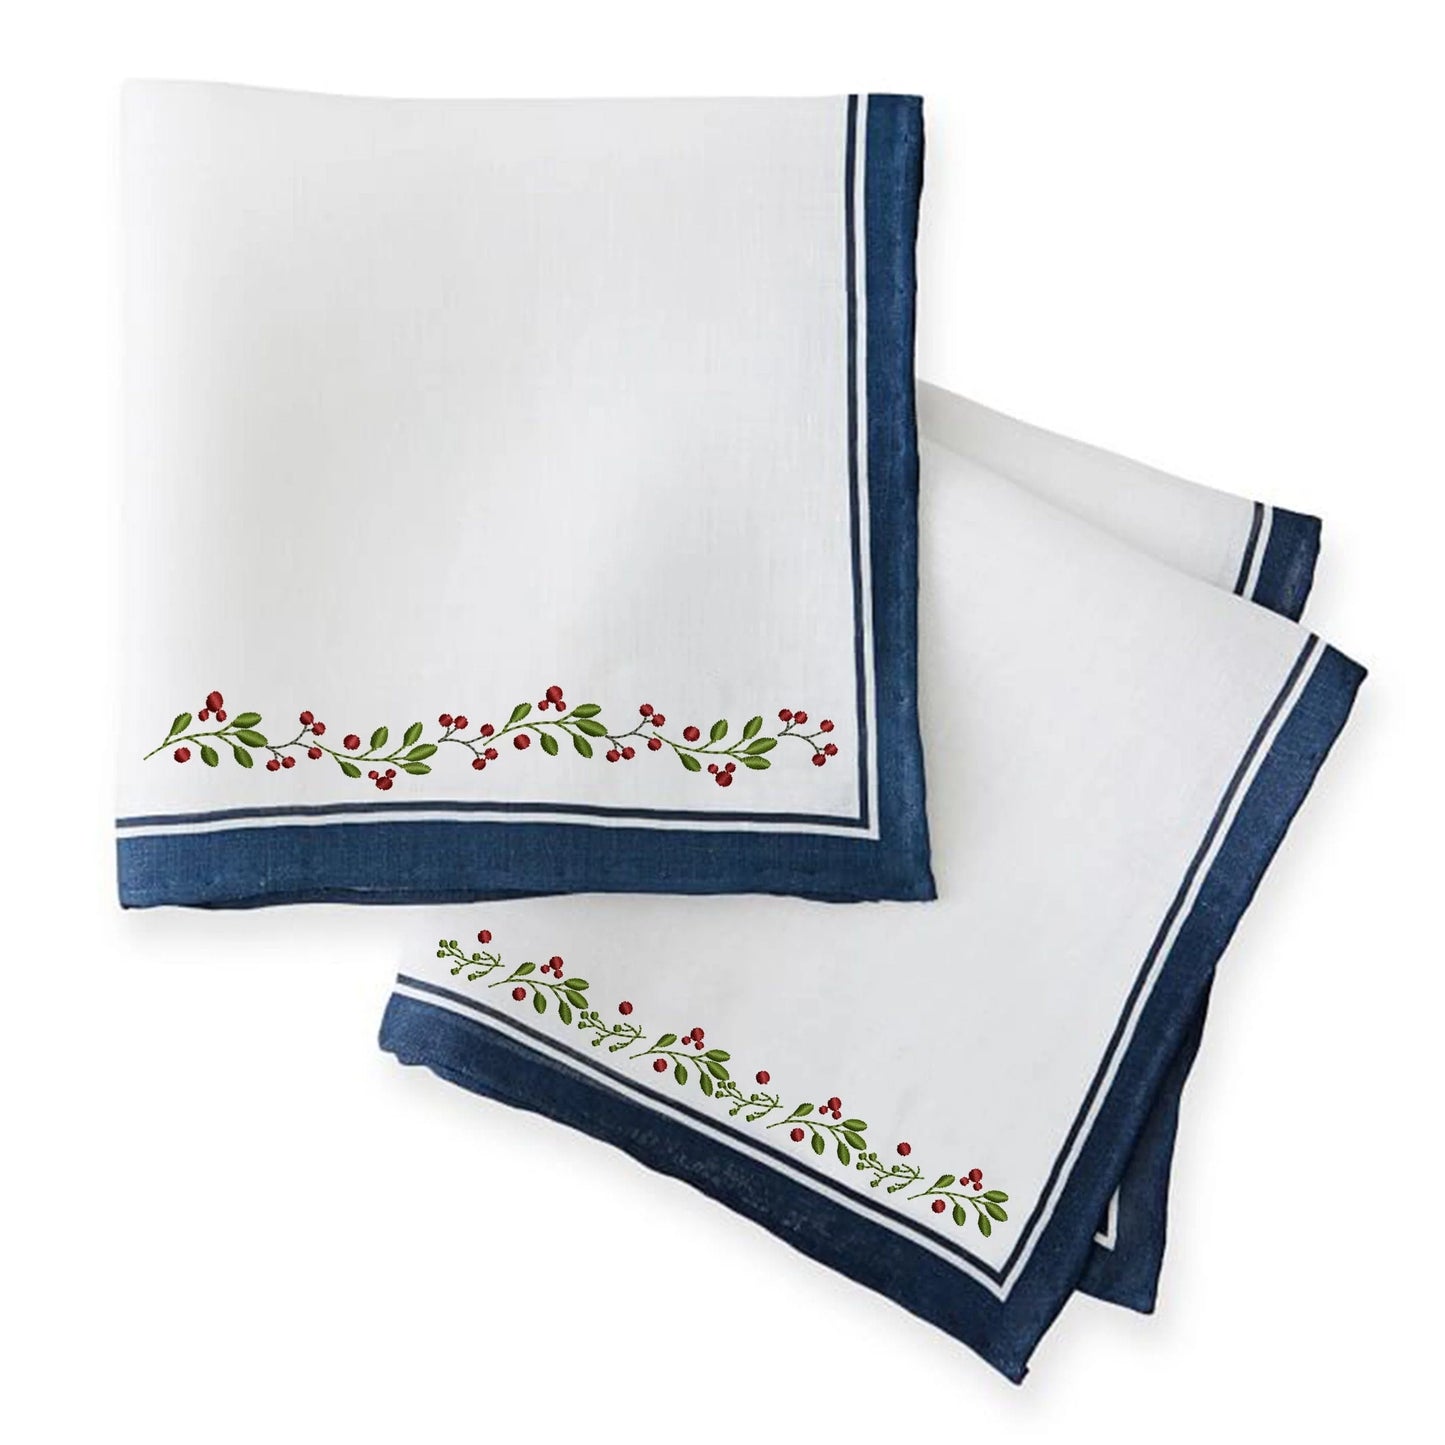 Christmas Flower Border Machine Embroidery Design on napkins